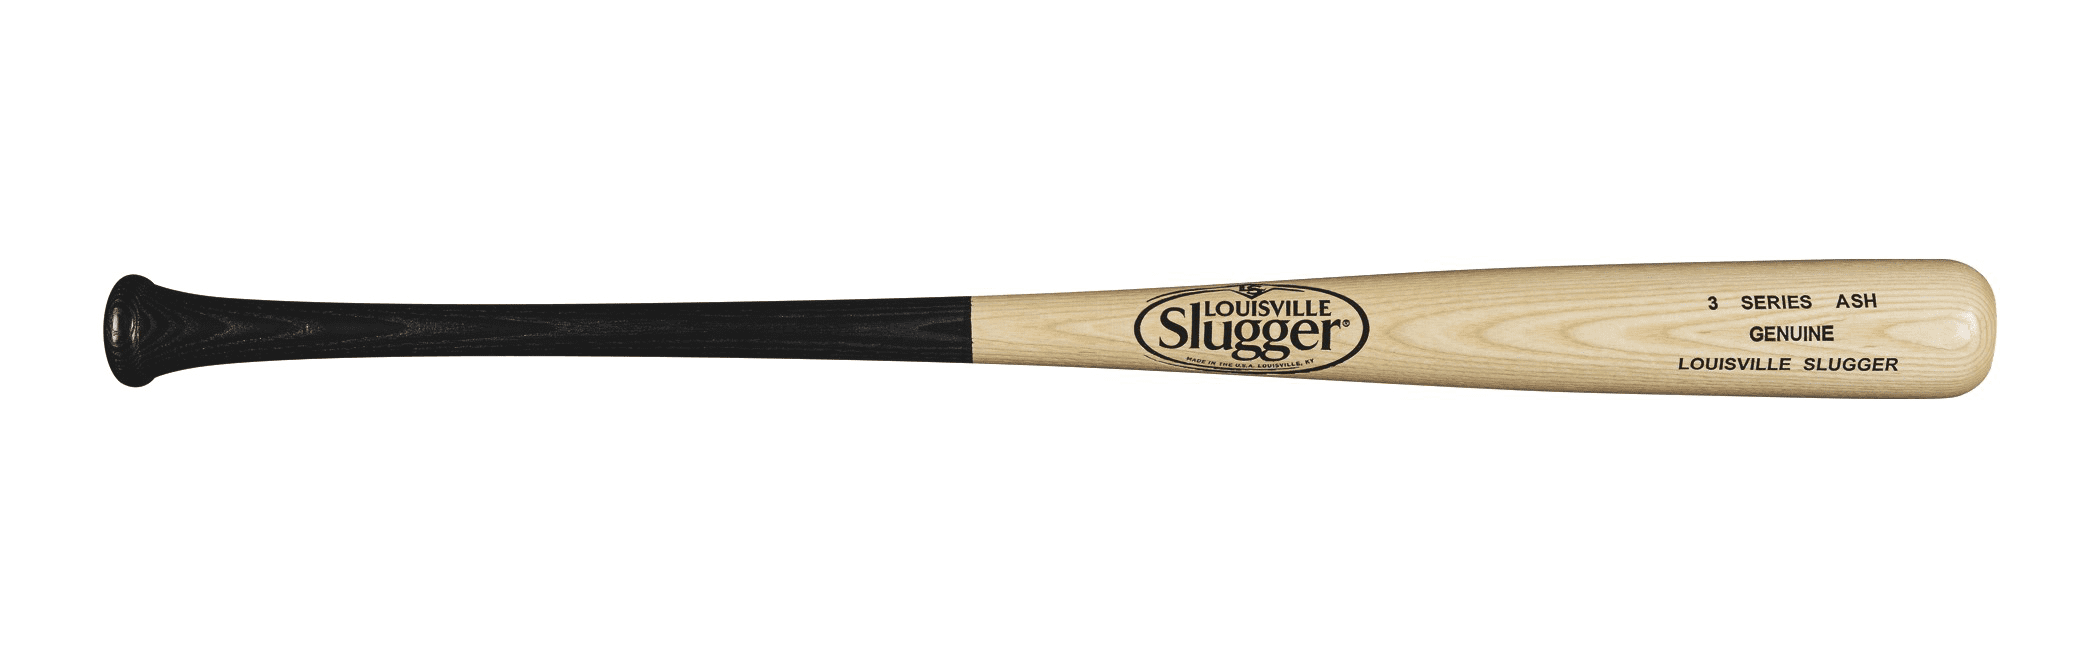 Louisville Slugger Baseball Bat Collection 